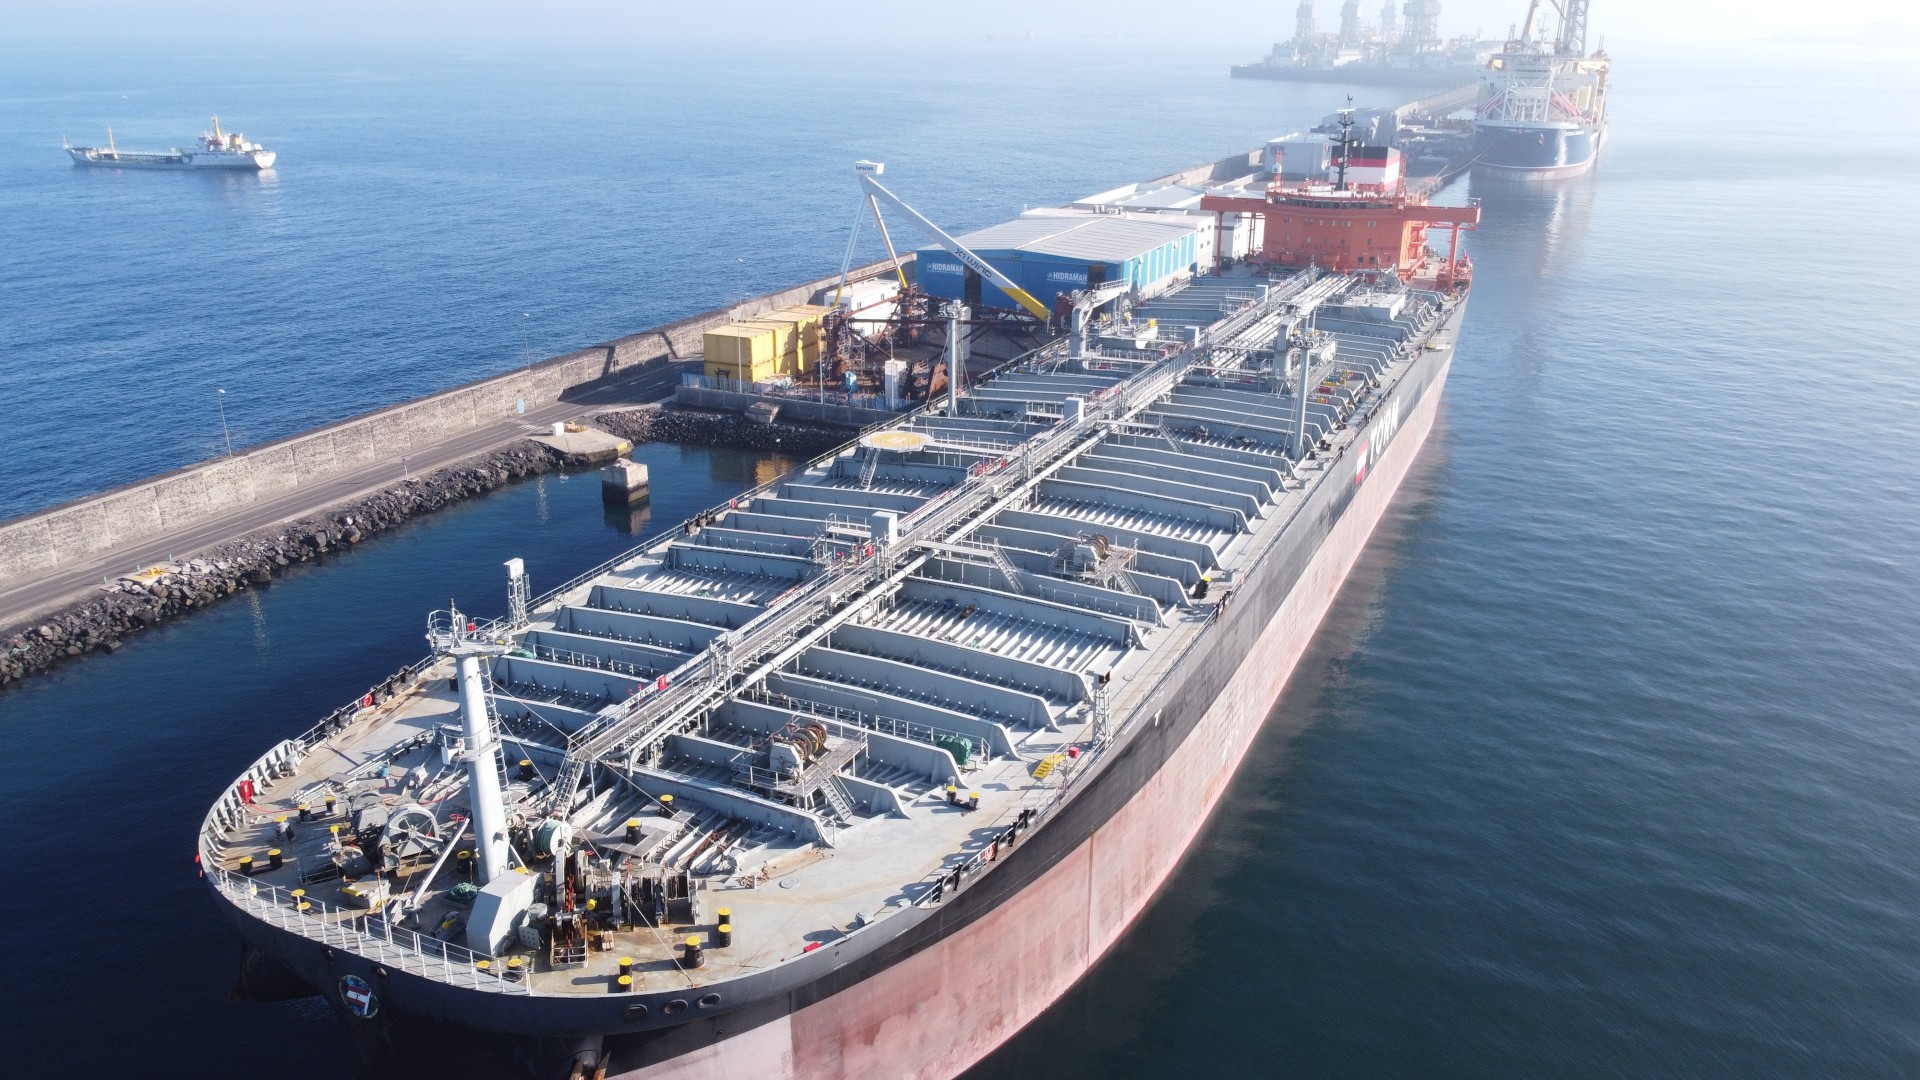 Hidramar Group Takes on Hull Repair of a Crude Oil Tanker Vessel